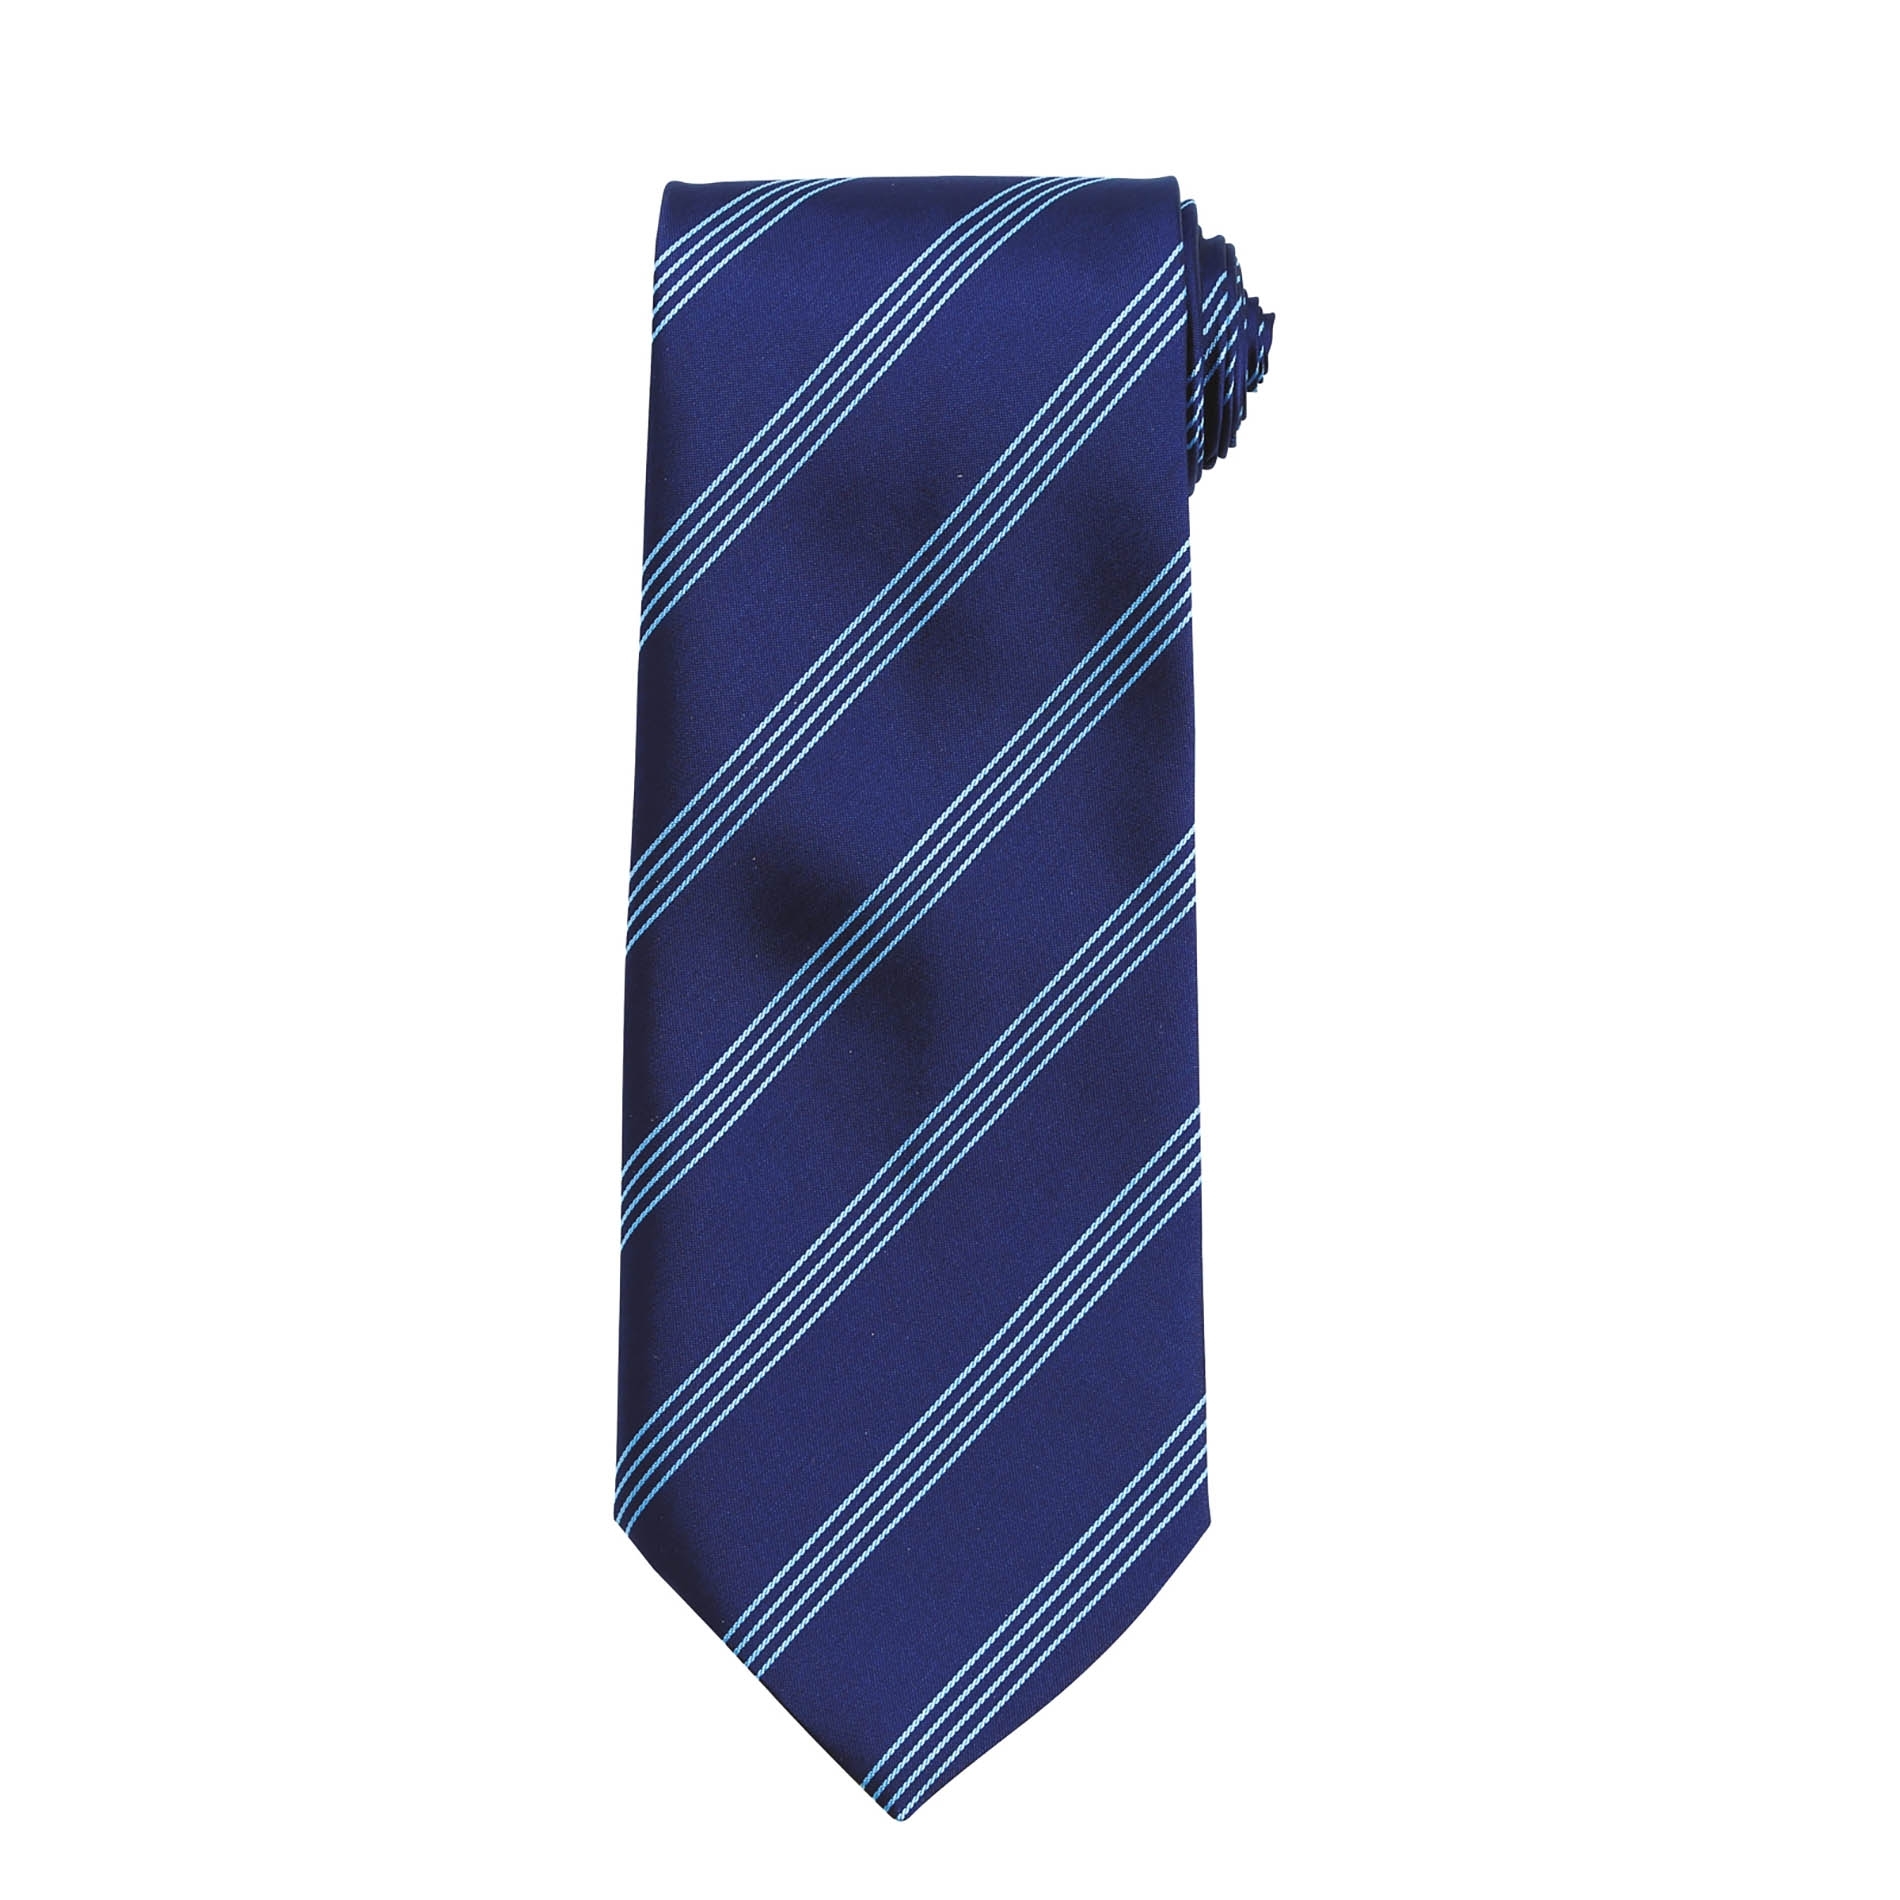 Cravate Four Stripe Navy / Blue Bleu